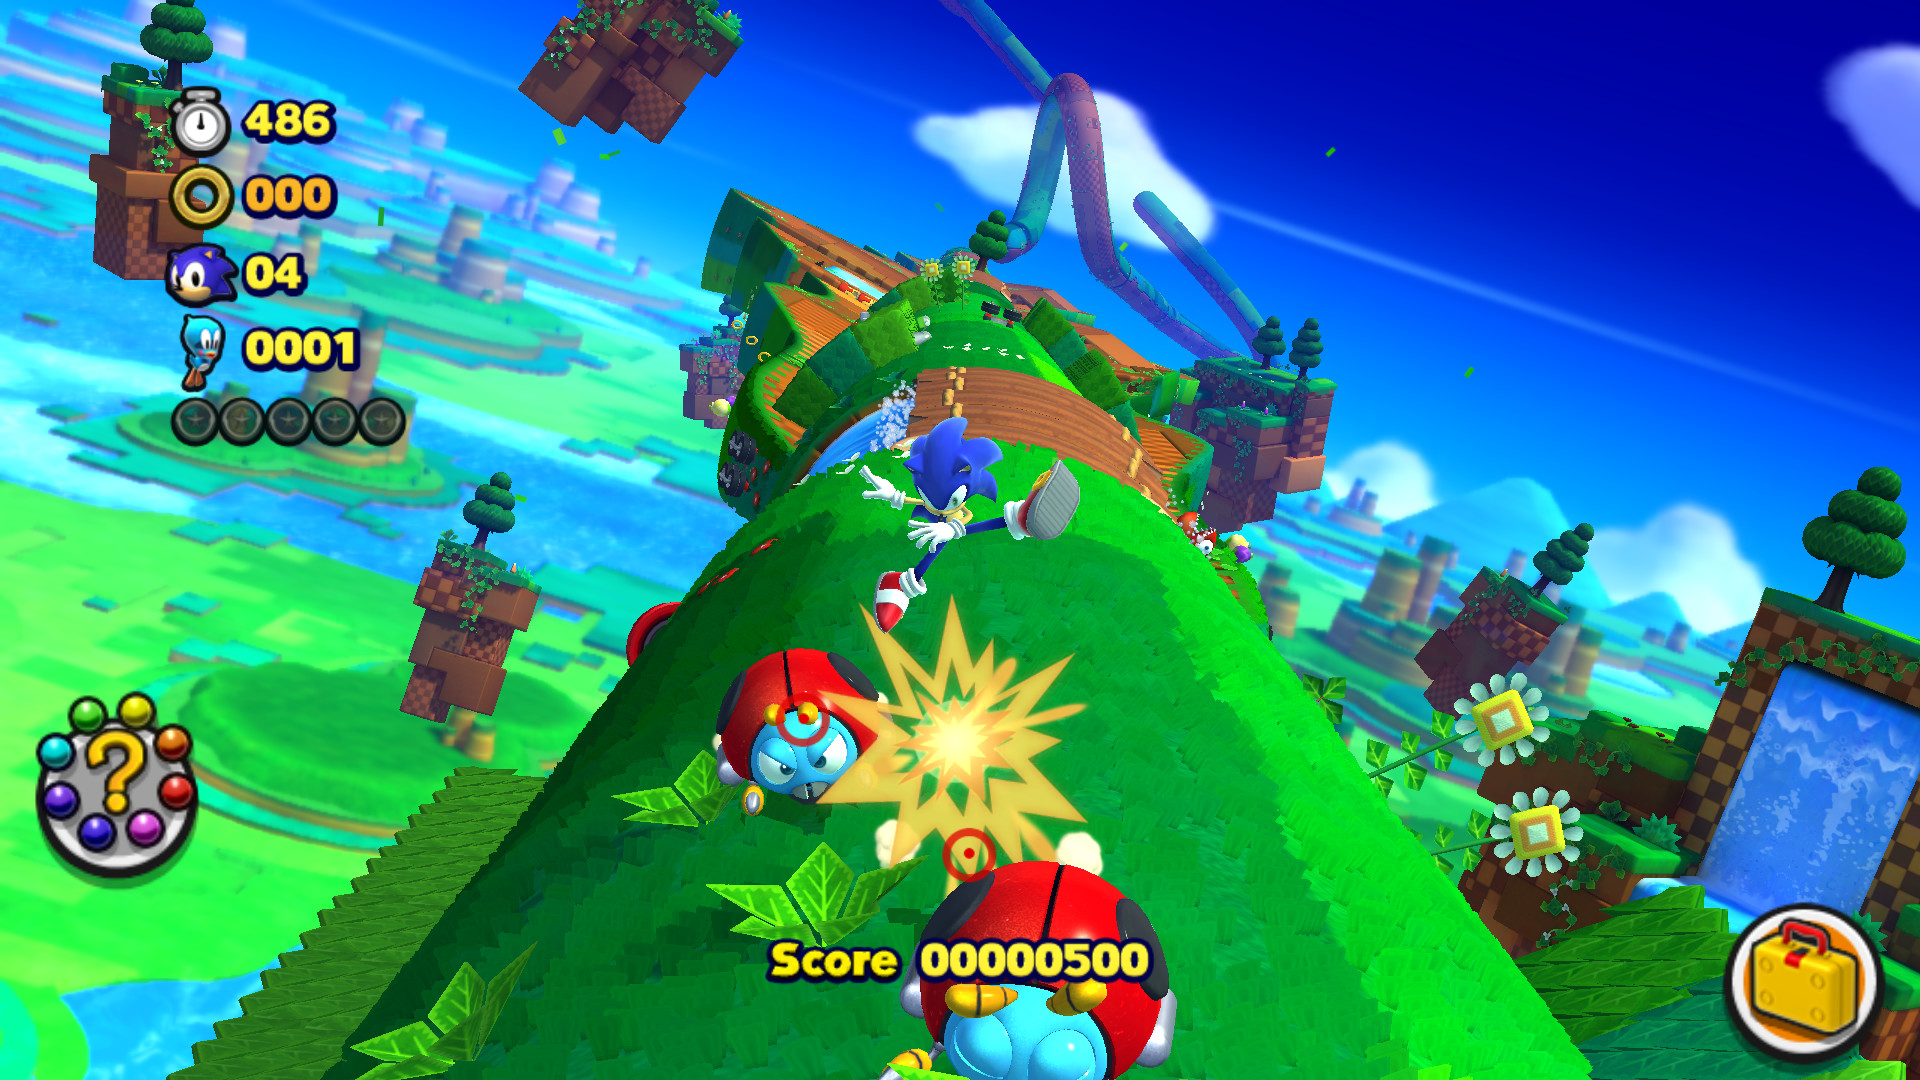 Sonic Lost World, Jogos para a Wii U, Jogos